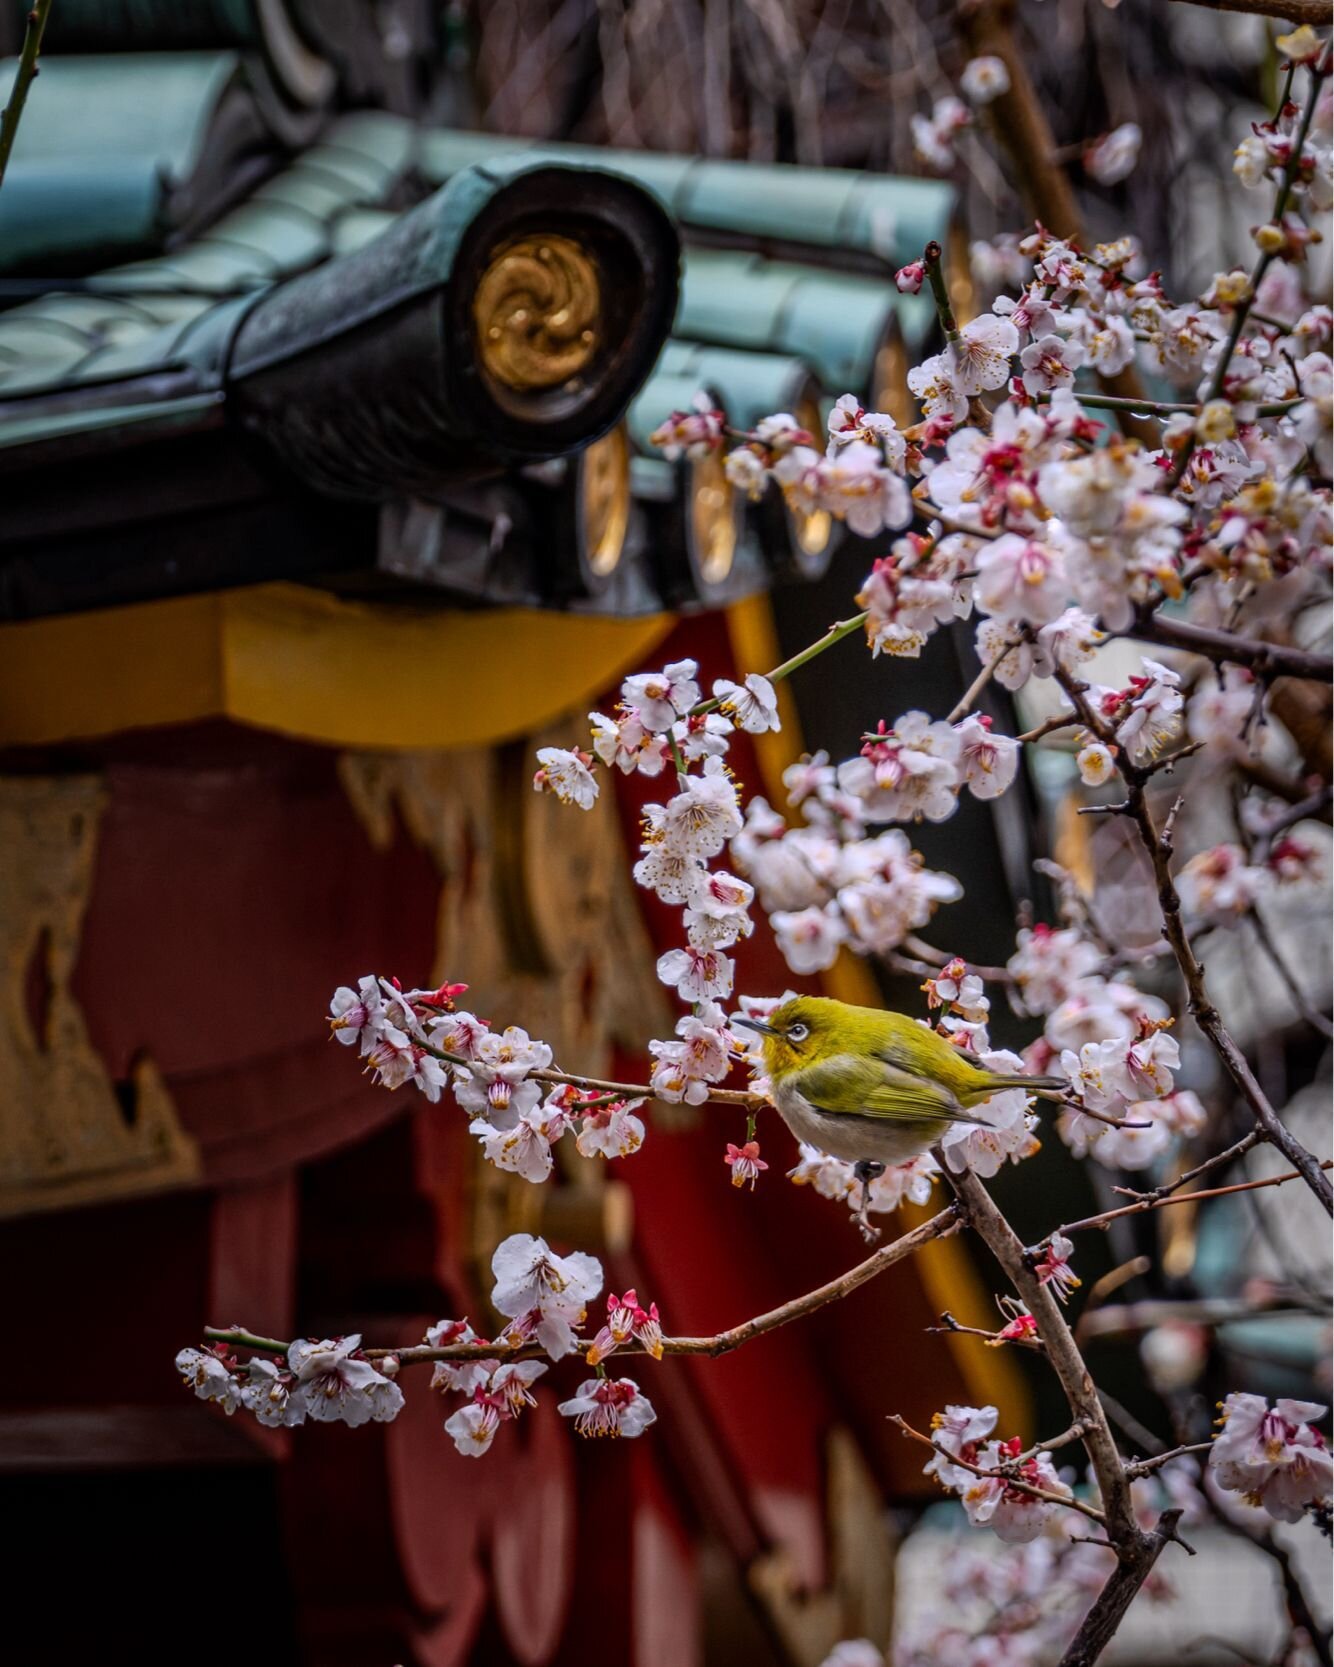 Early #sakura blossoms at #kandamyoujin shrine

Camera: #SonyA7CR

#Tokyo #Japan #Bird #cherryblossoms #Shrine